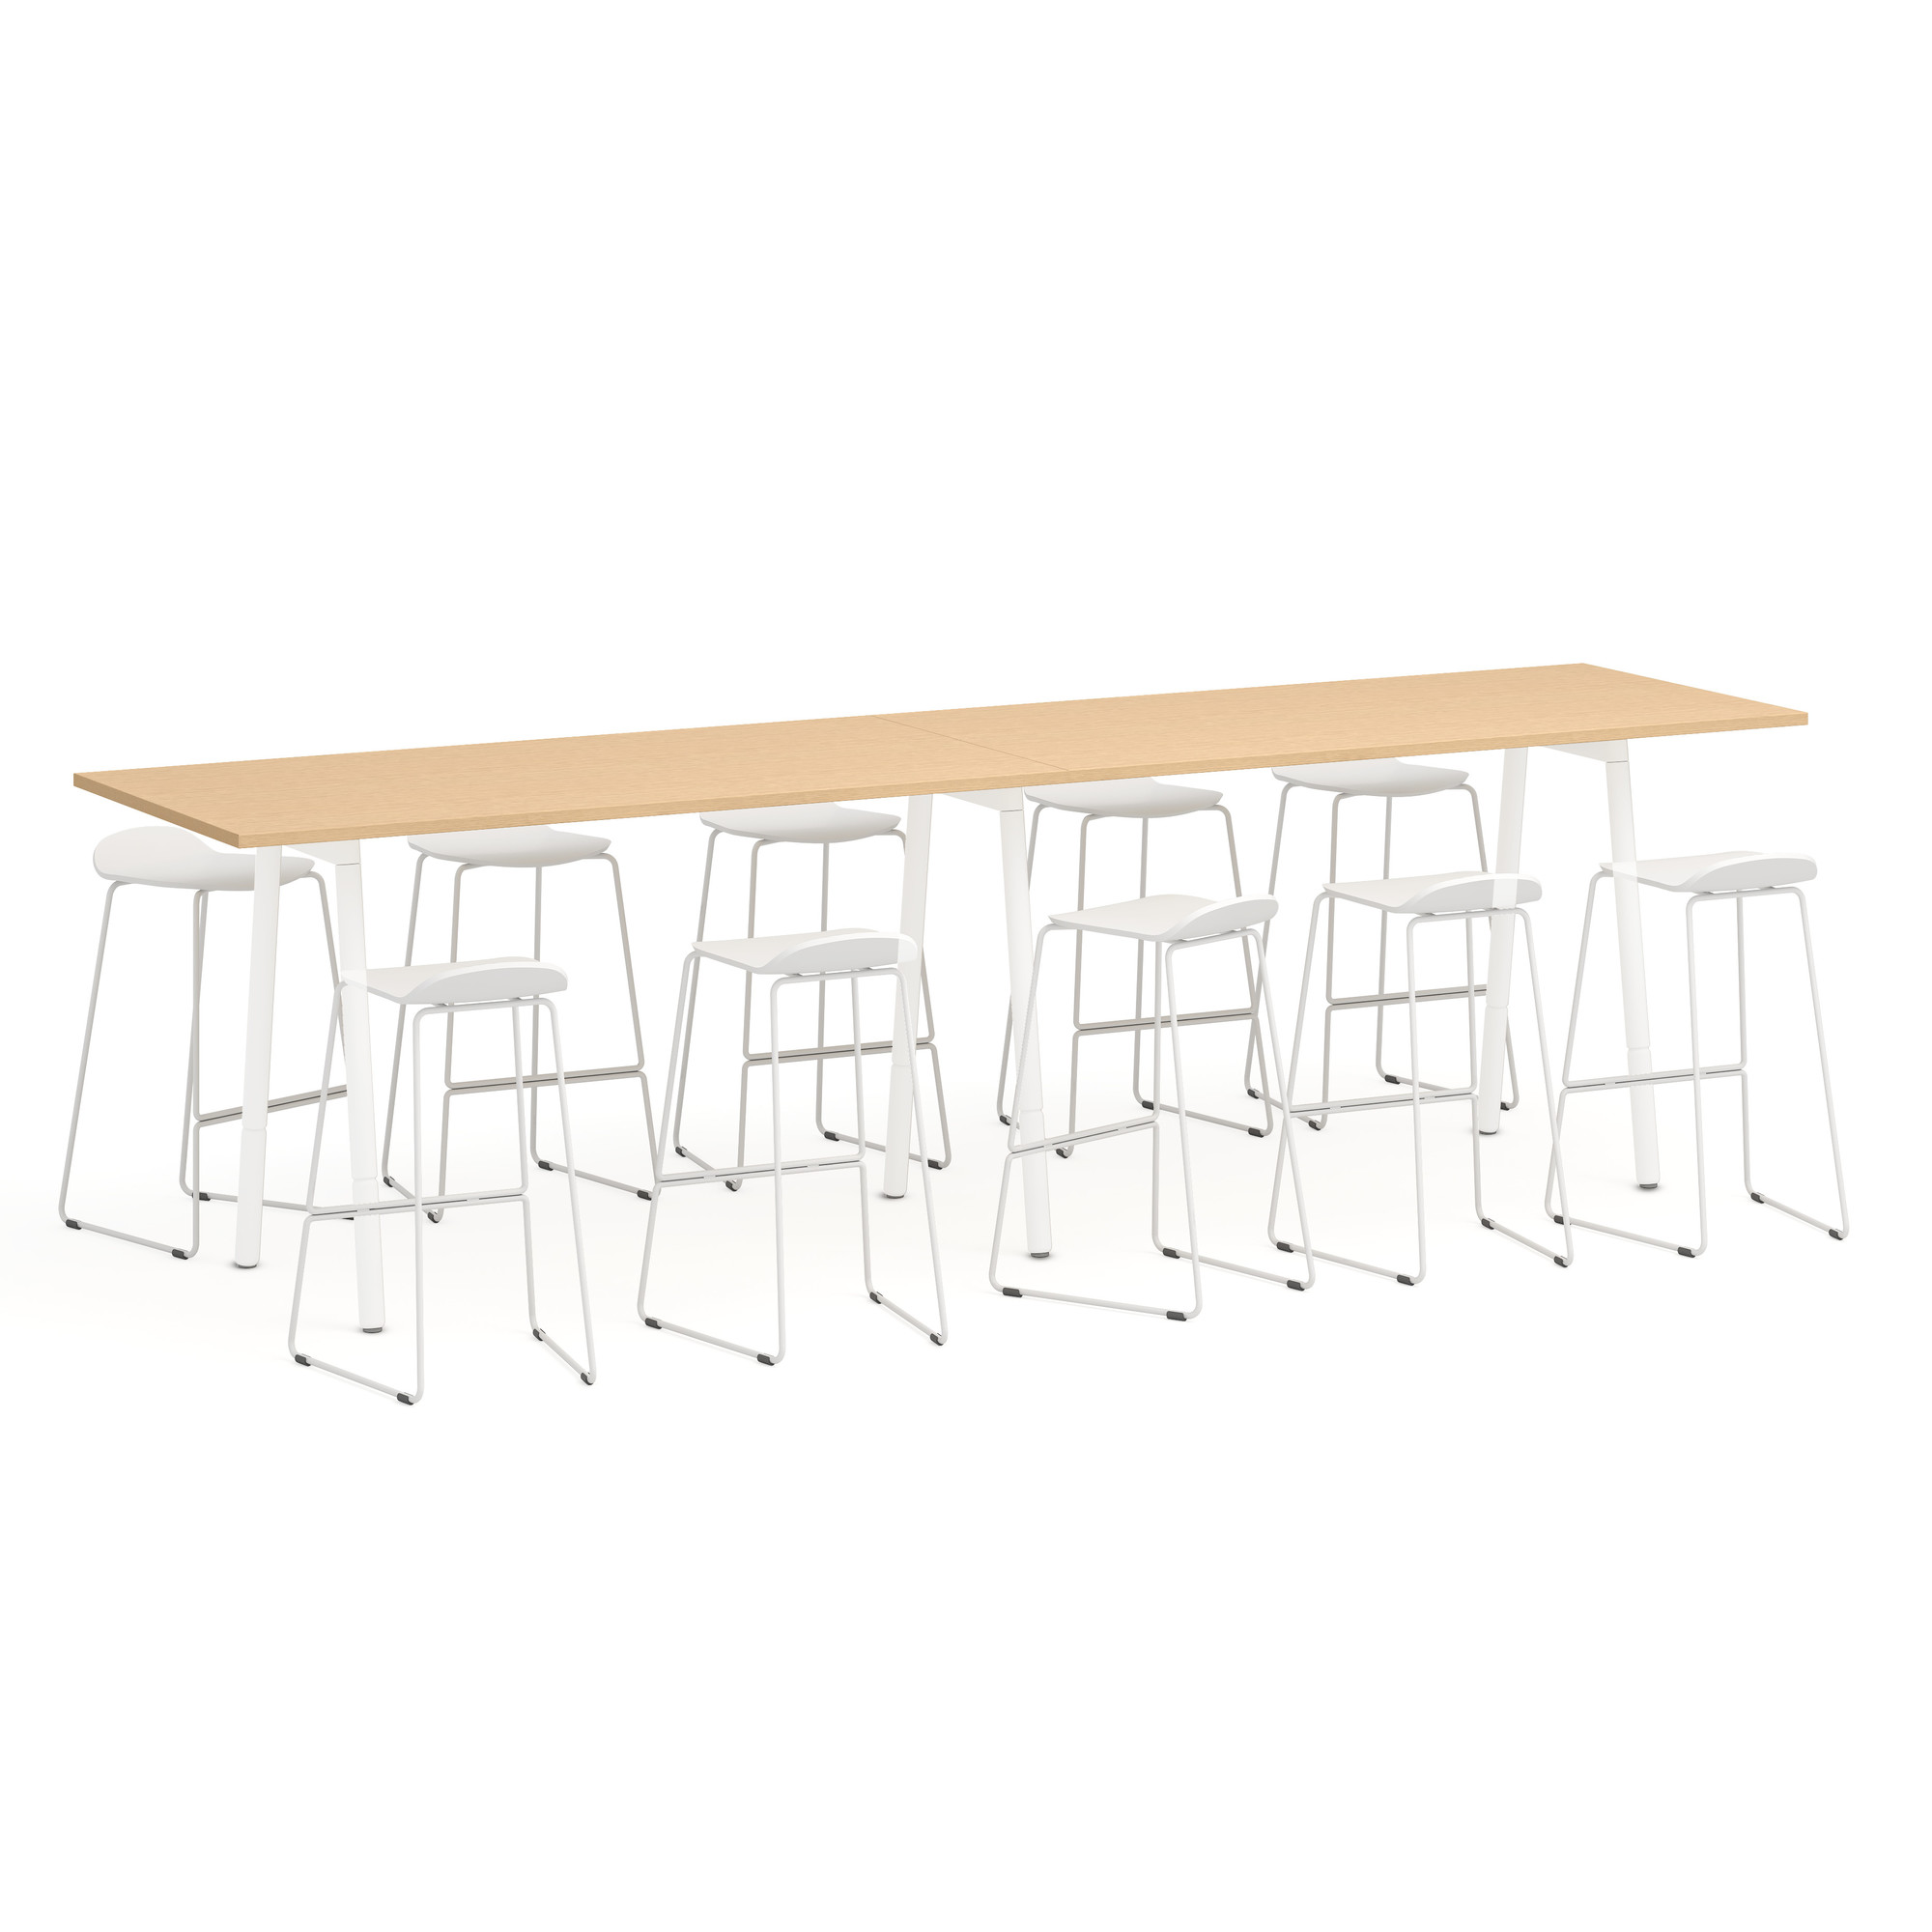 Series A Standing Table, Natural Oak, 144x36", White Legs,Natural Oak,hi-res